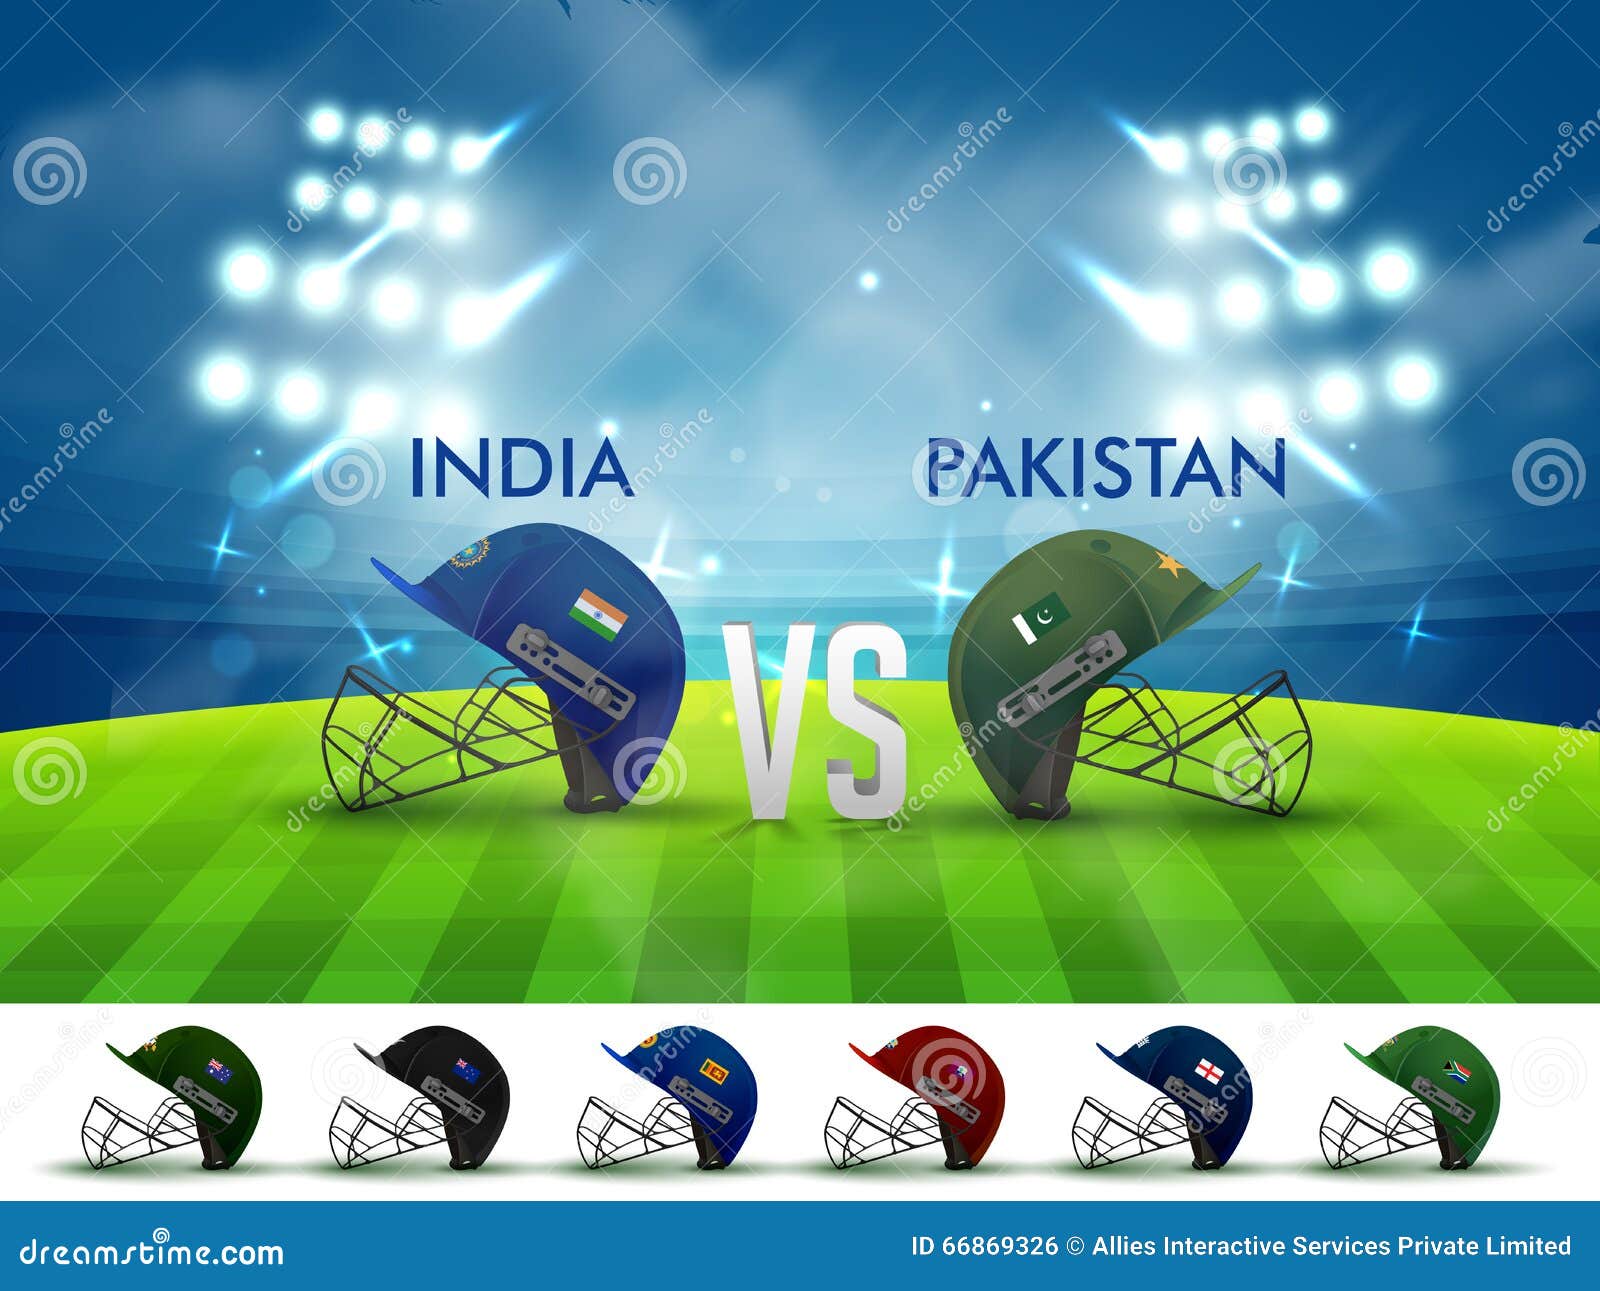 india vs pakistan cricket match concept.